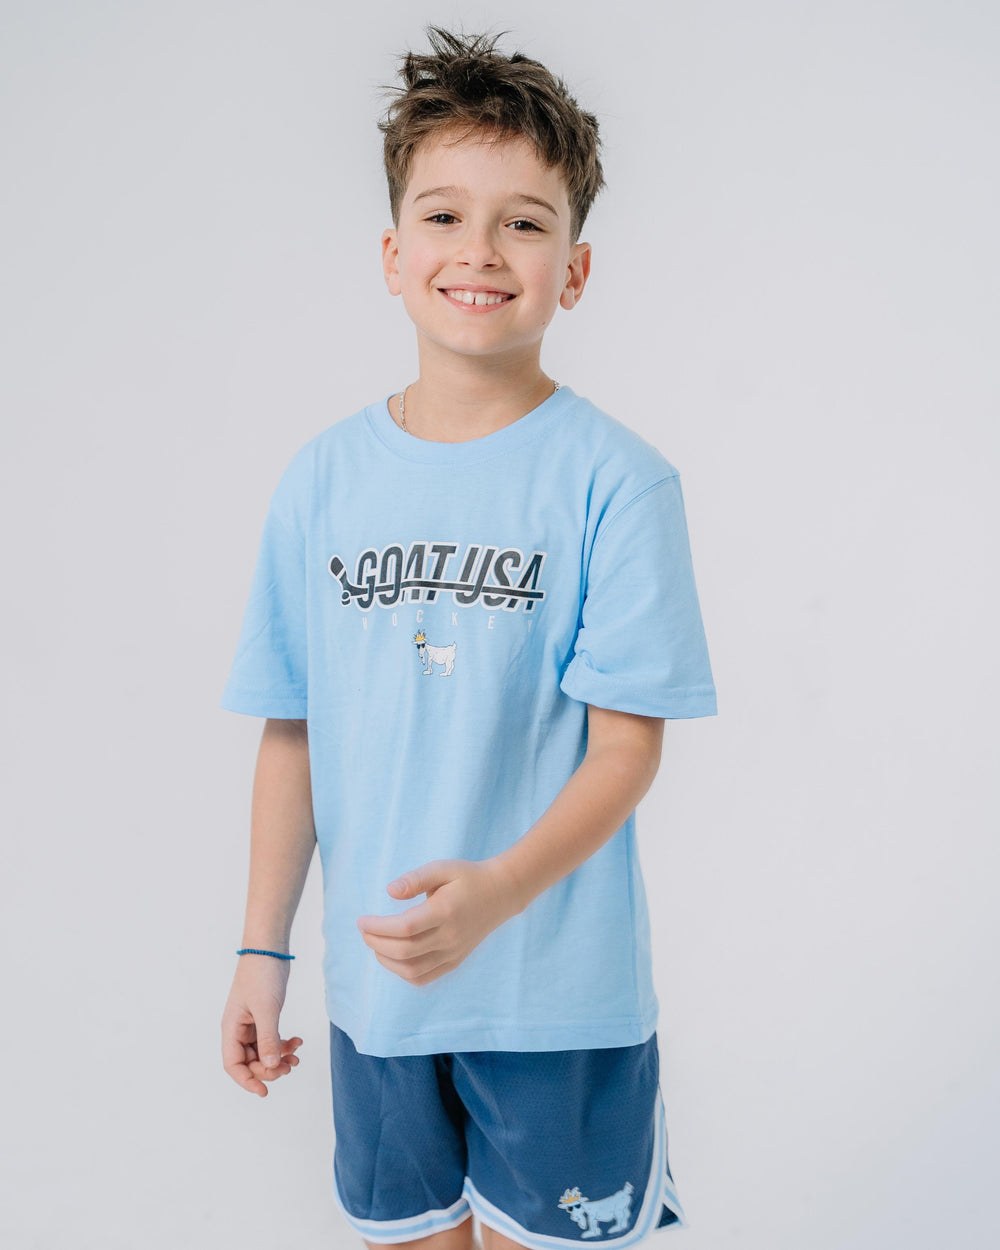 Kid wearing carolina blue shirt with hockey stick that goes through the wording "GOAT USA"